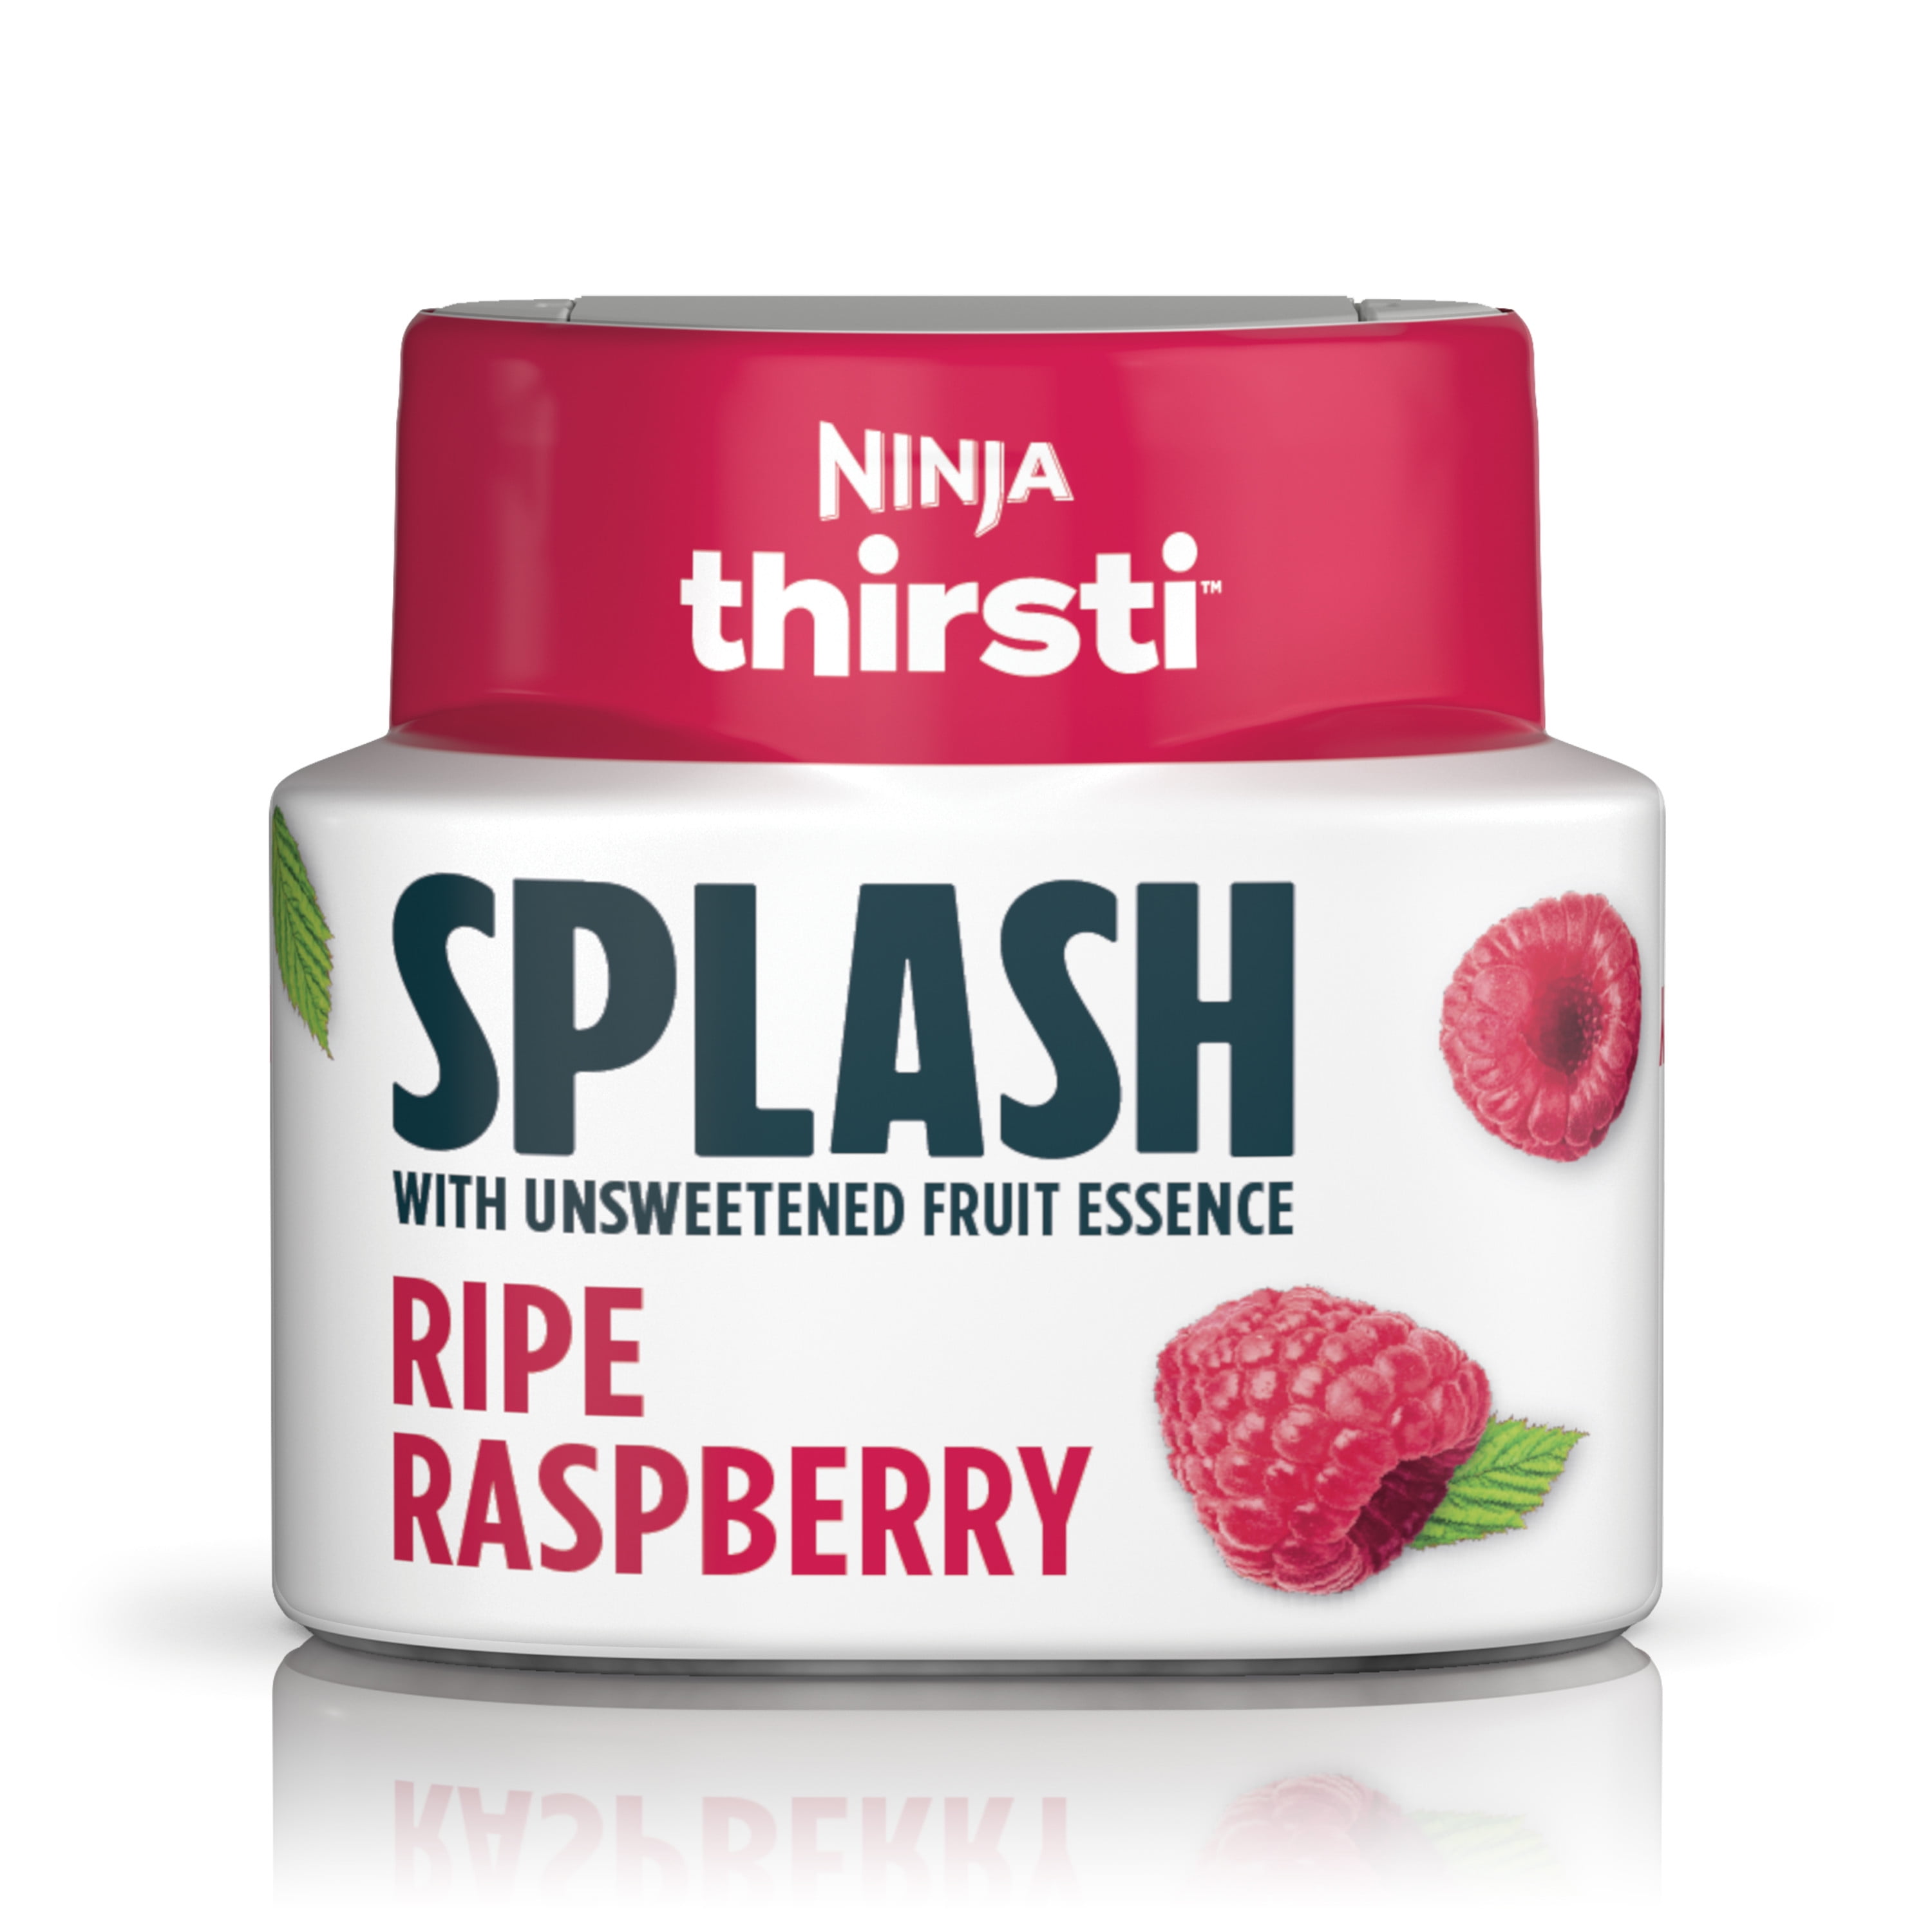 Ninja Thirsti Flavored Water Drops, Hydrate with Electrolytes, Coconut Pineapple, 3 Pack, Zero Calories, Zero Sugar, 2.23 fl oz, Makes 17, 12oz